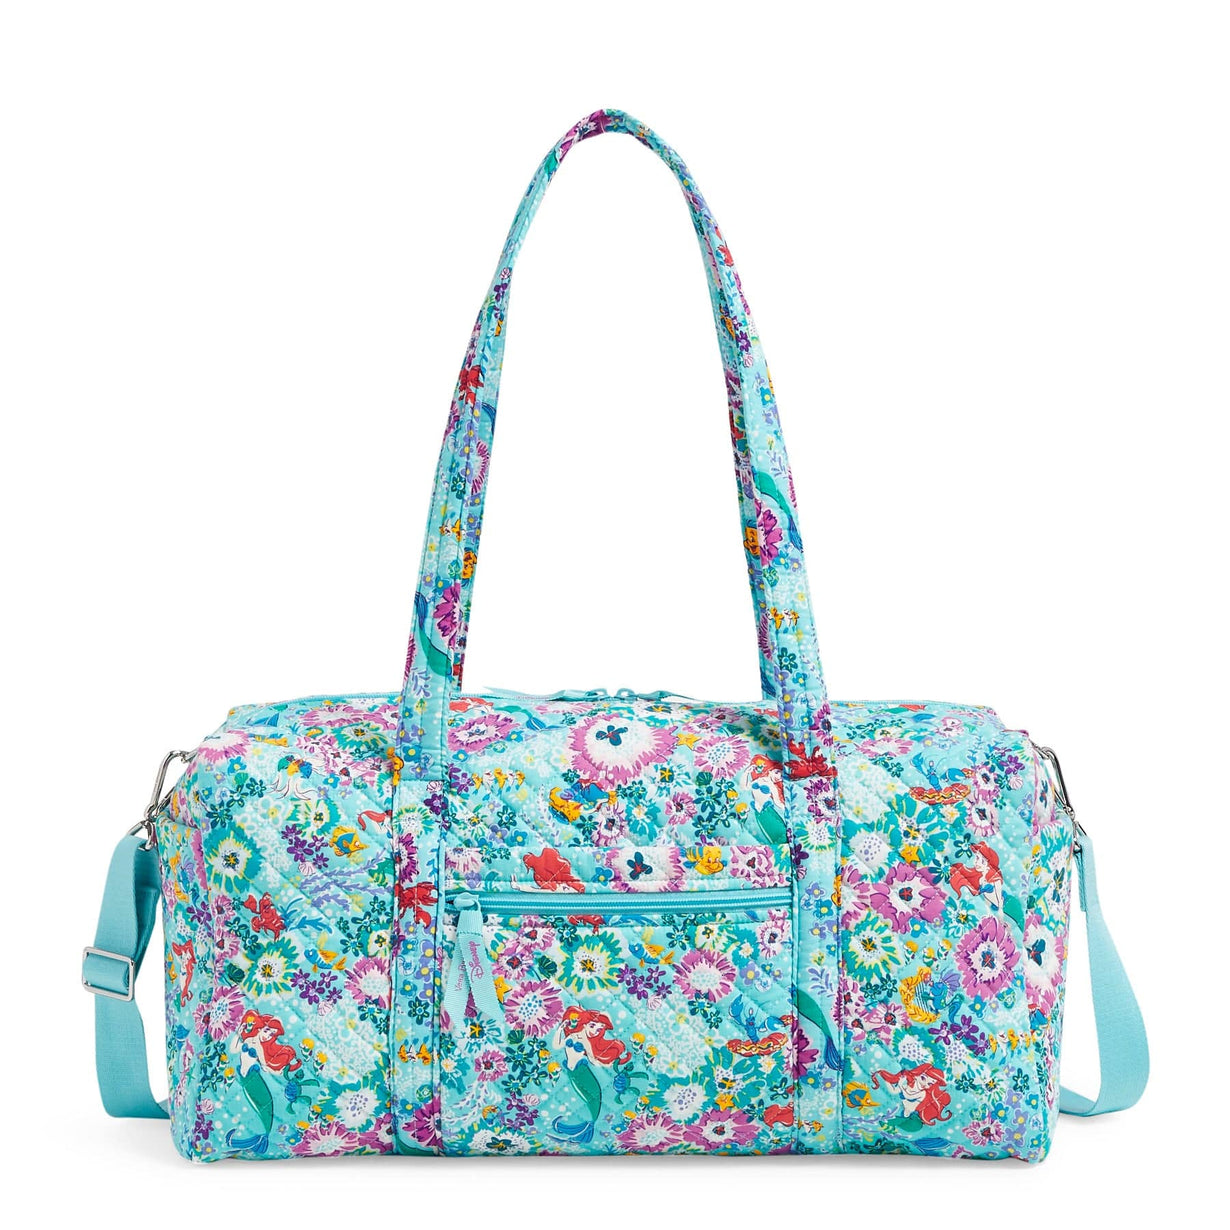 Disney Medium Travel Duffel Bag - Ariel Floral | Vera Bradley